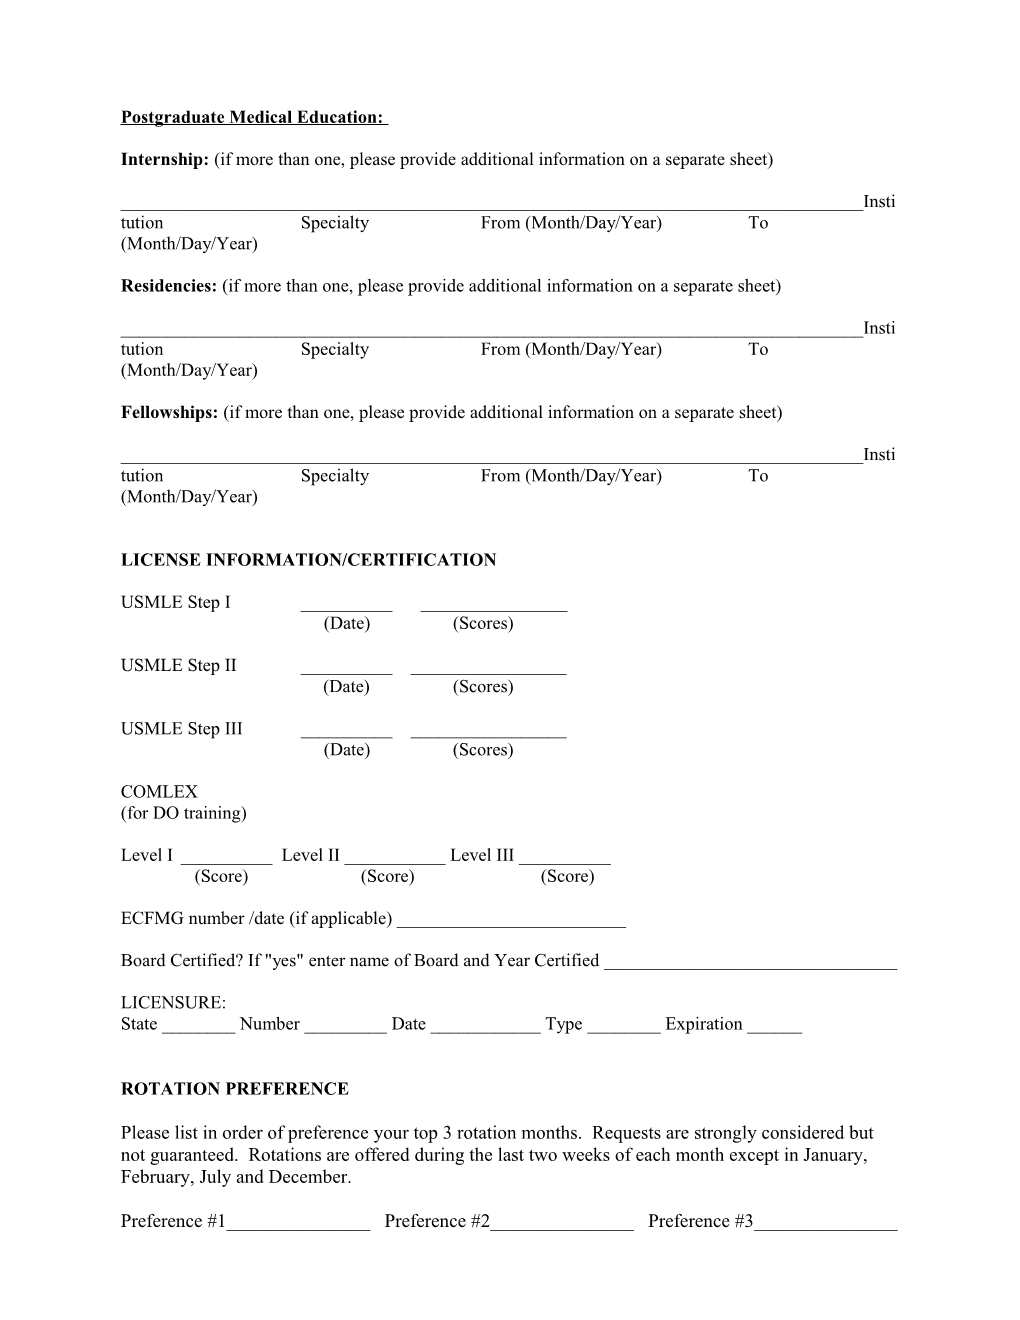 UCLA Sports Medicine Fellowship Rotation Application. UCLA Dept of Family Medicine